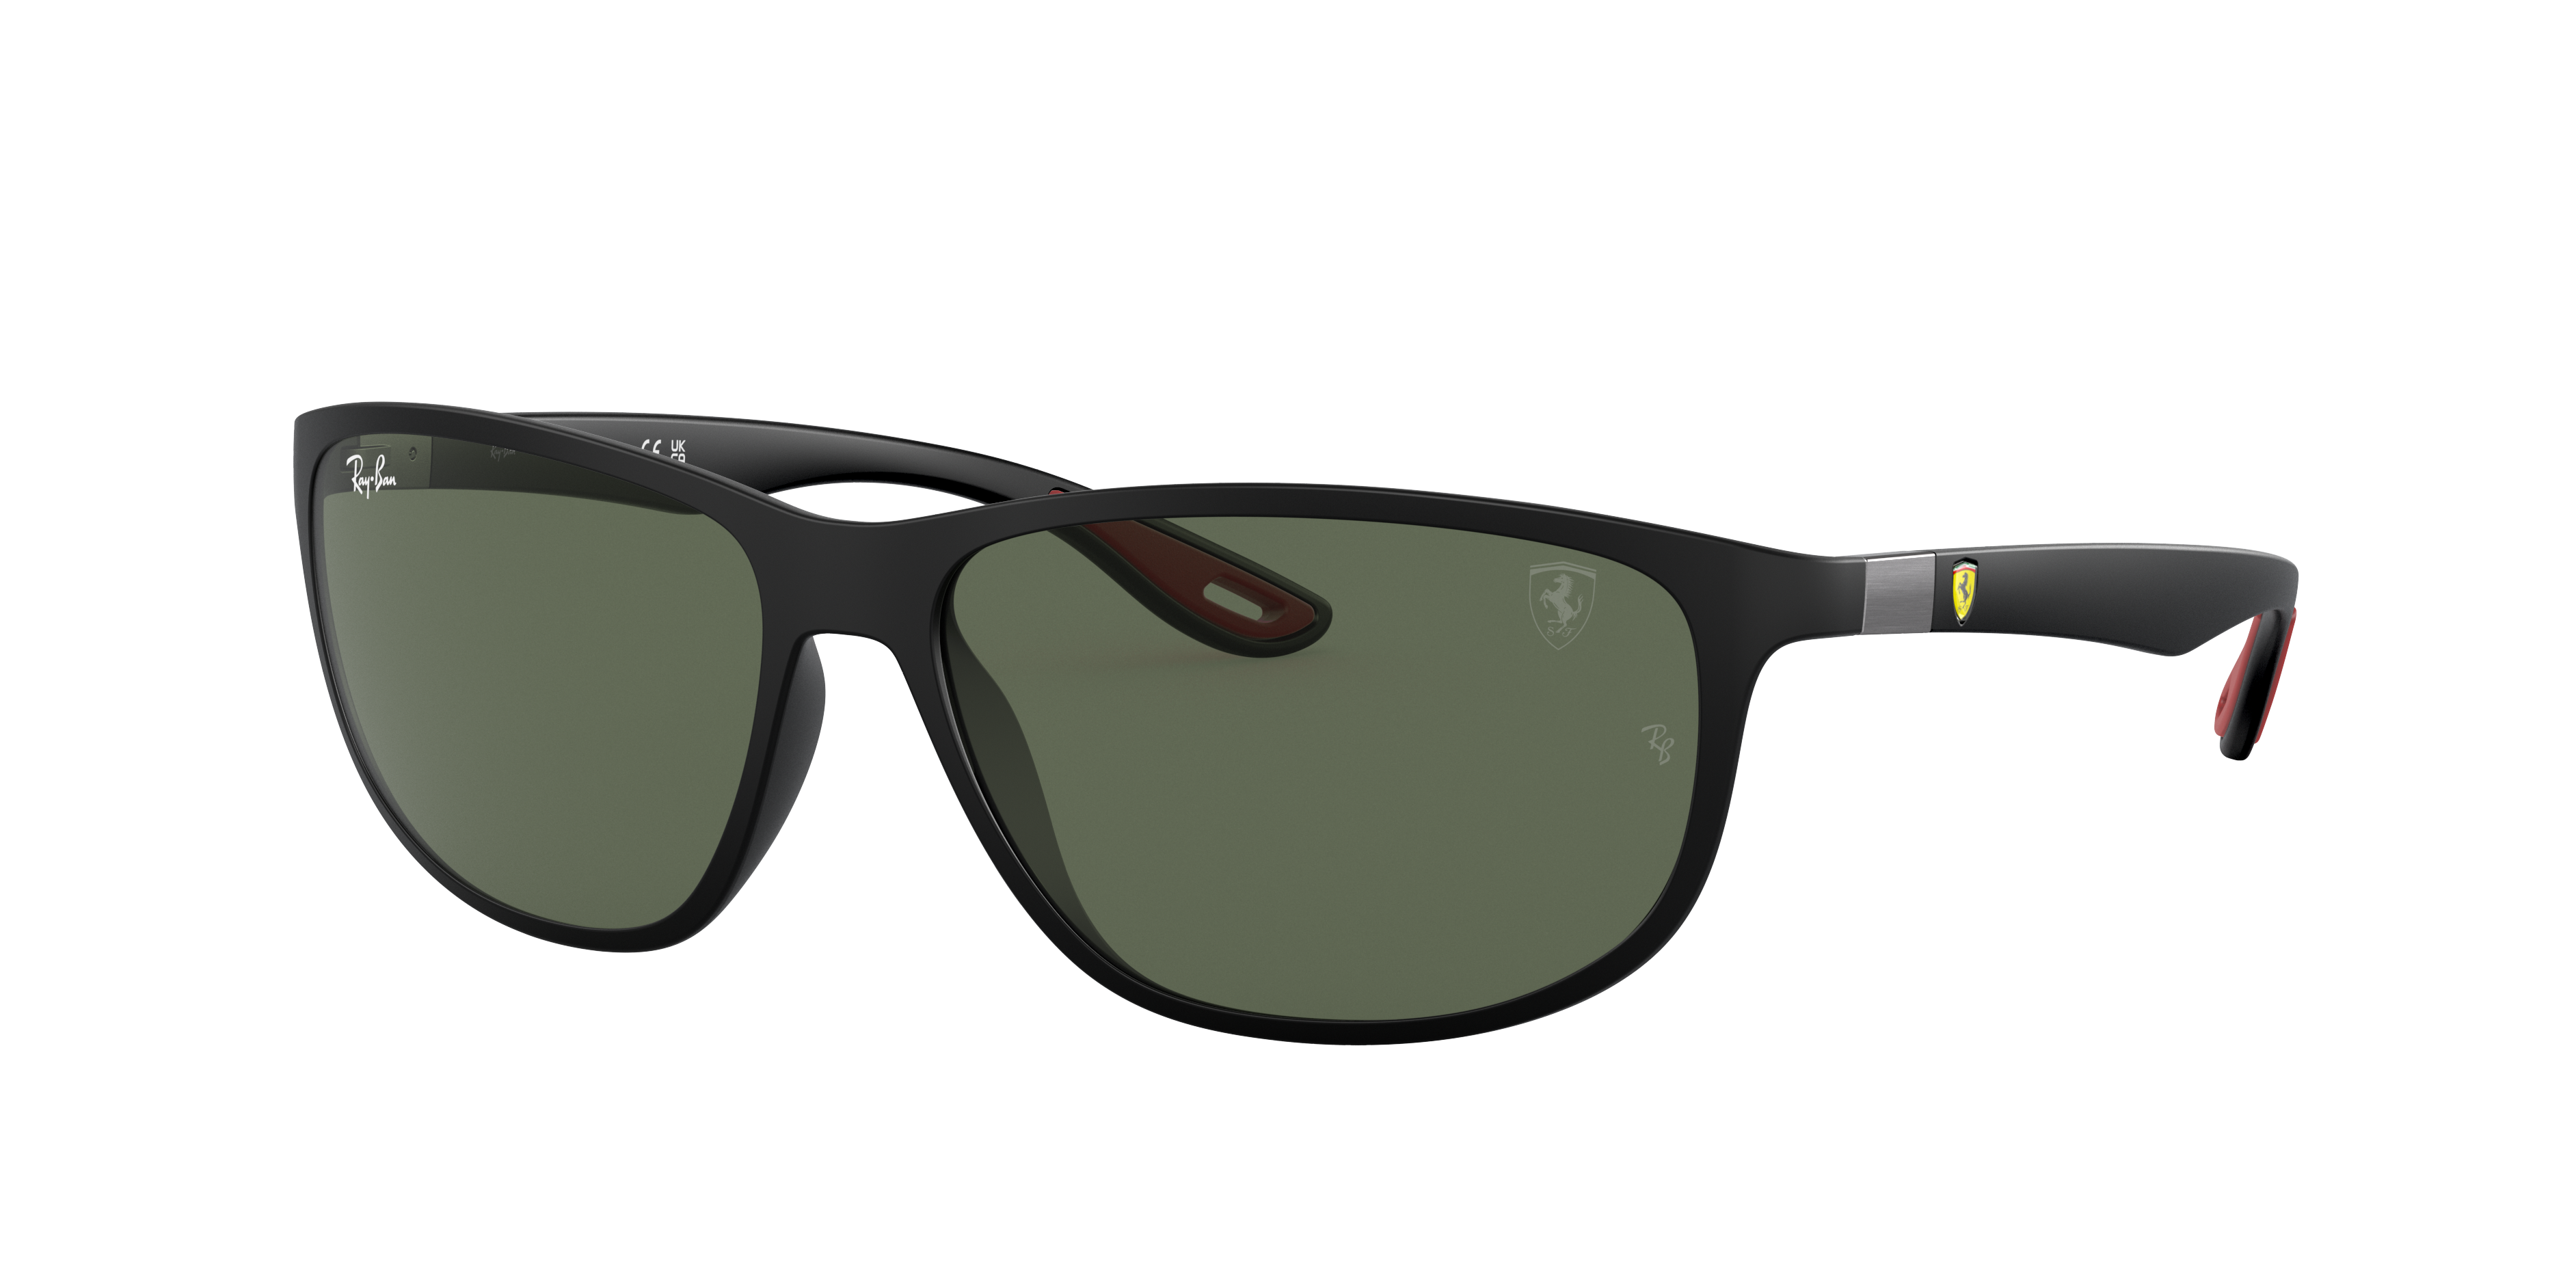 Rb4393m Scuderia Ferrari Collection Sunglasses in Black and Green | Ray-Ban®